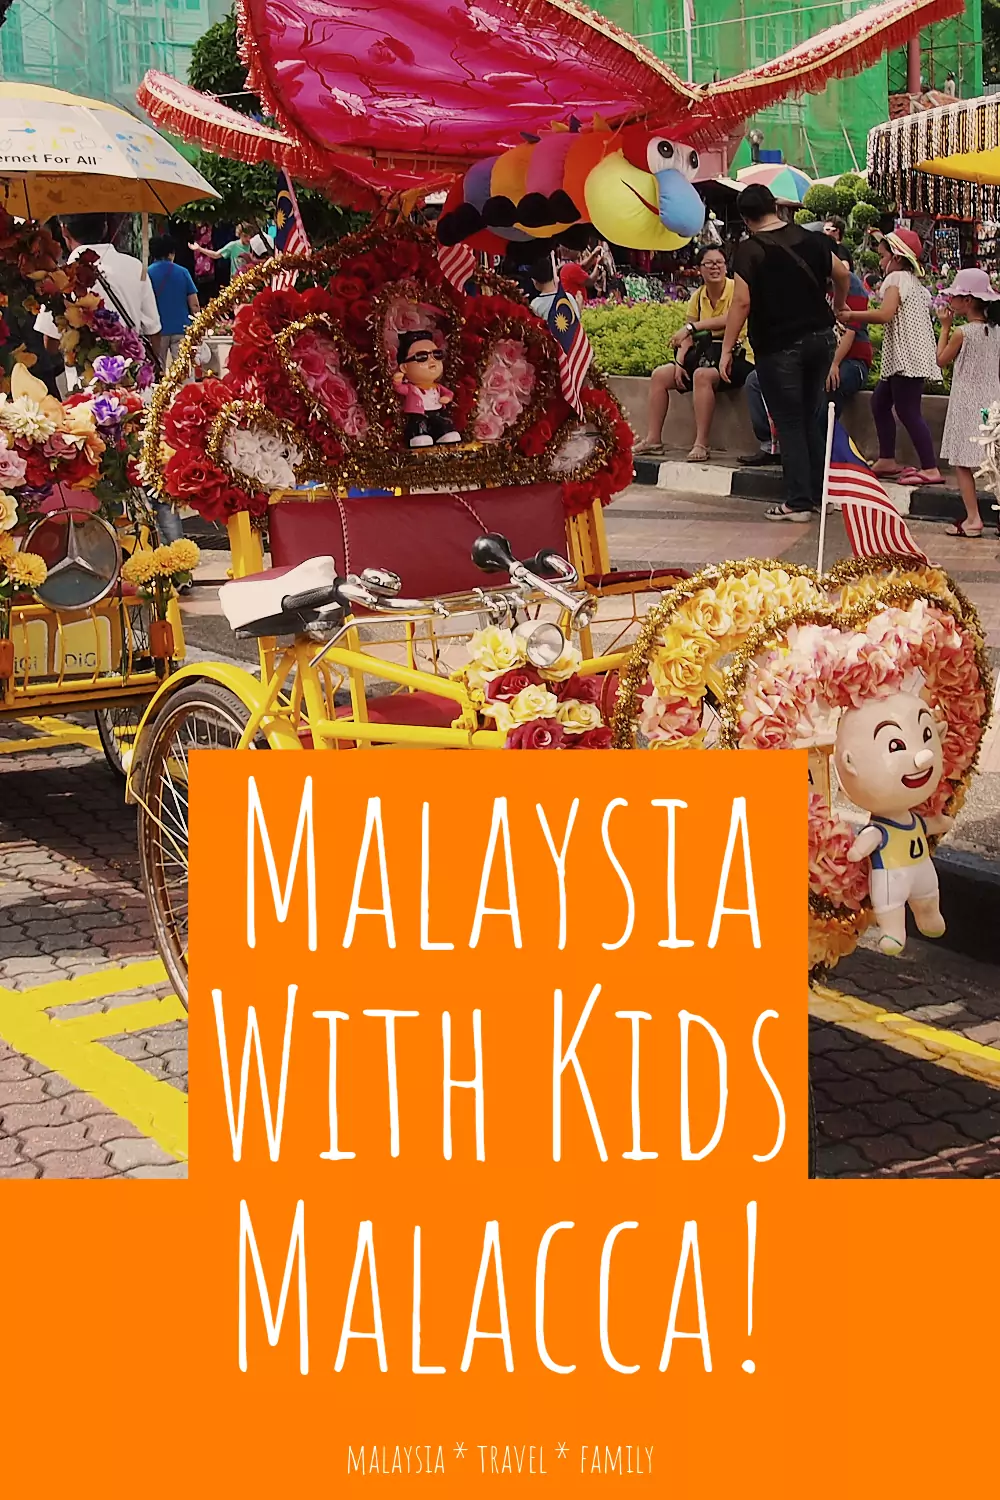 Malaysia with kids malacca guide